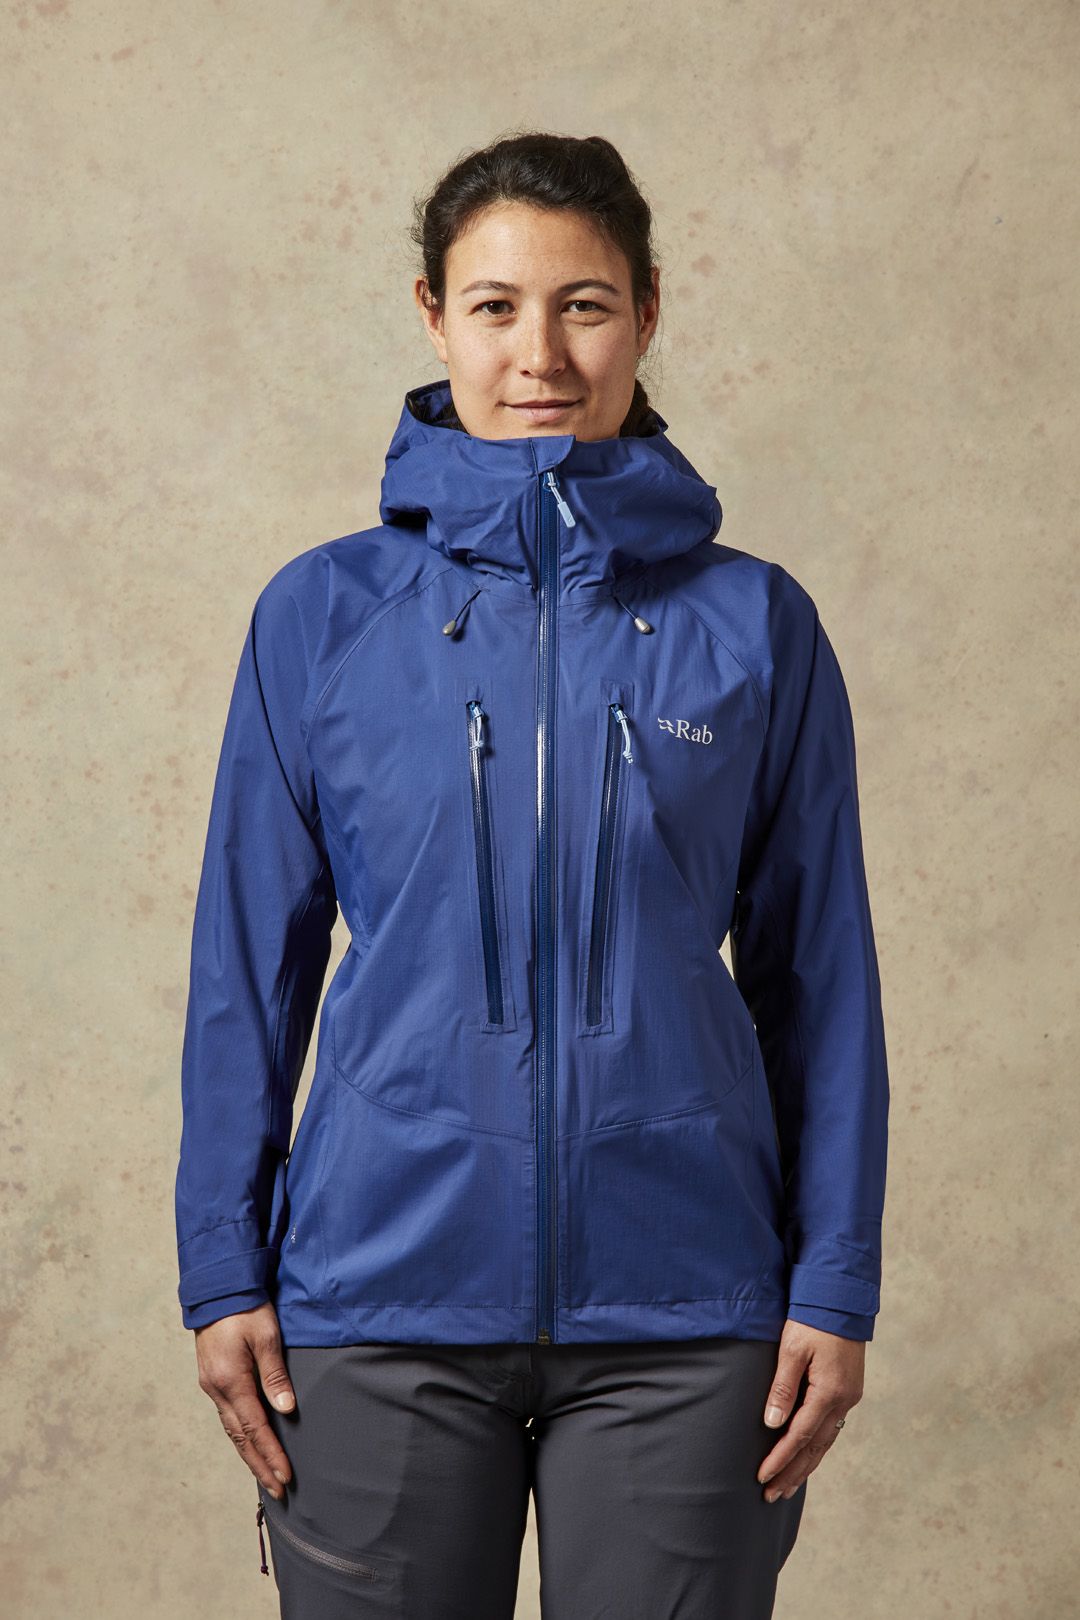 Rab - Downpour Alpine Jacket - Giacca antipioggia - Donna